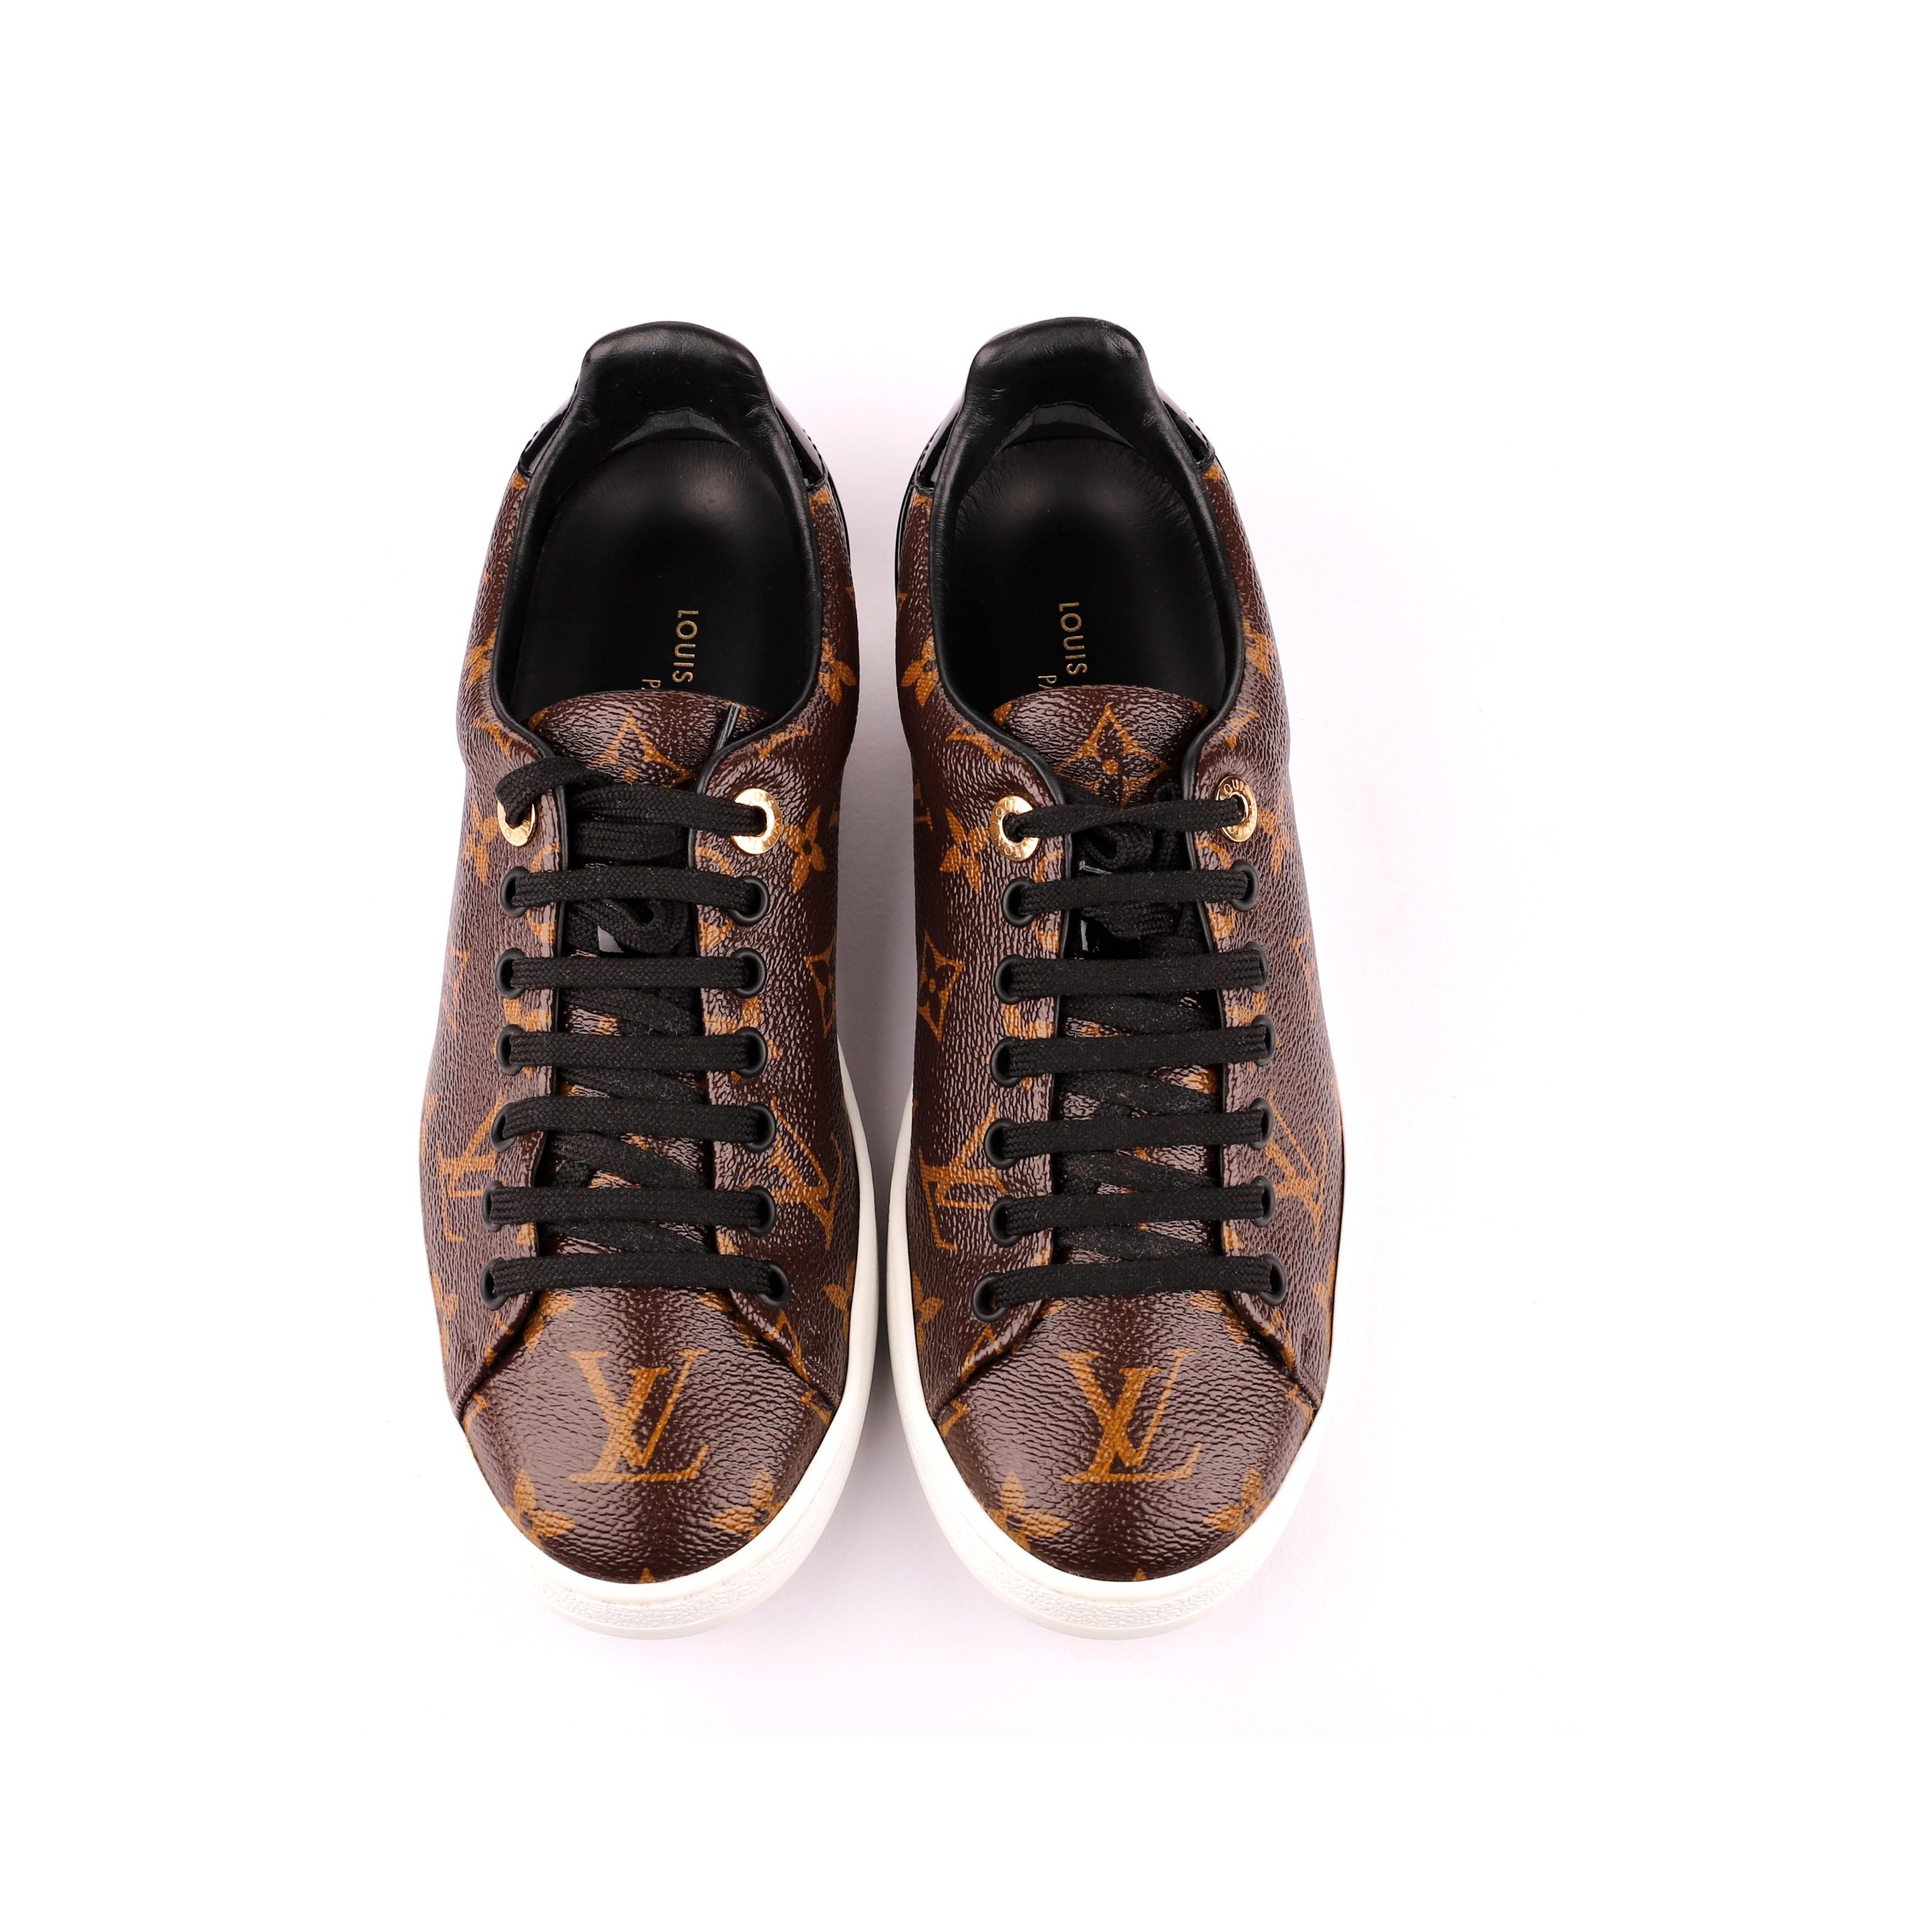 Louis Vuitton Monogram Canvas Leather Trim Frontrow Sneakers Size 36